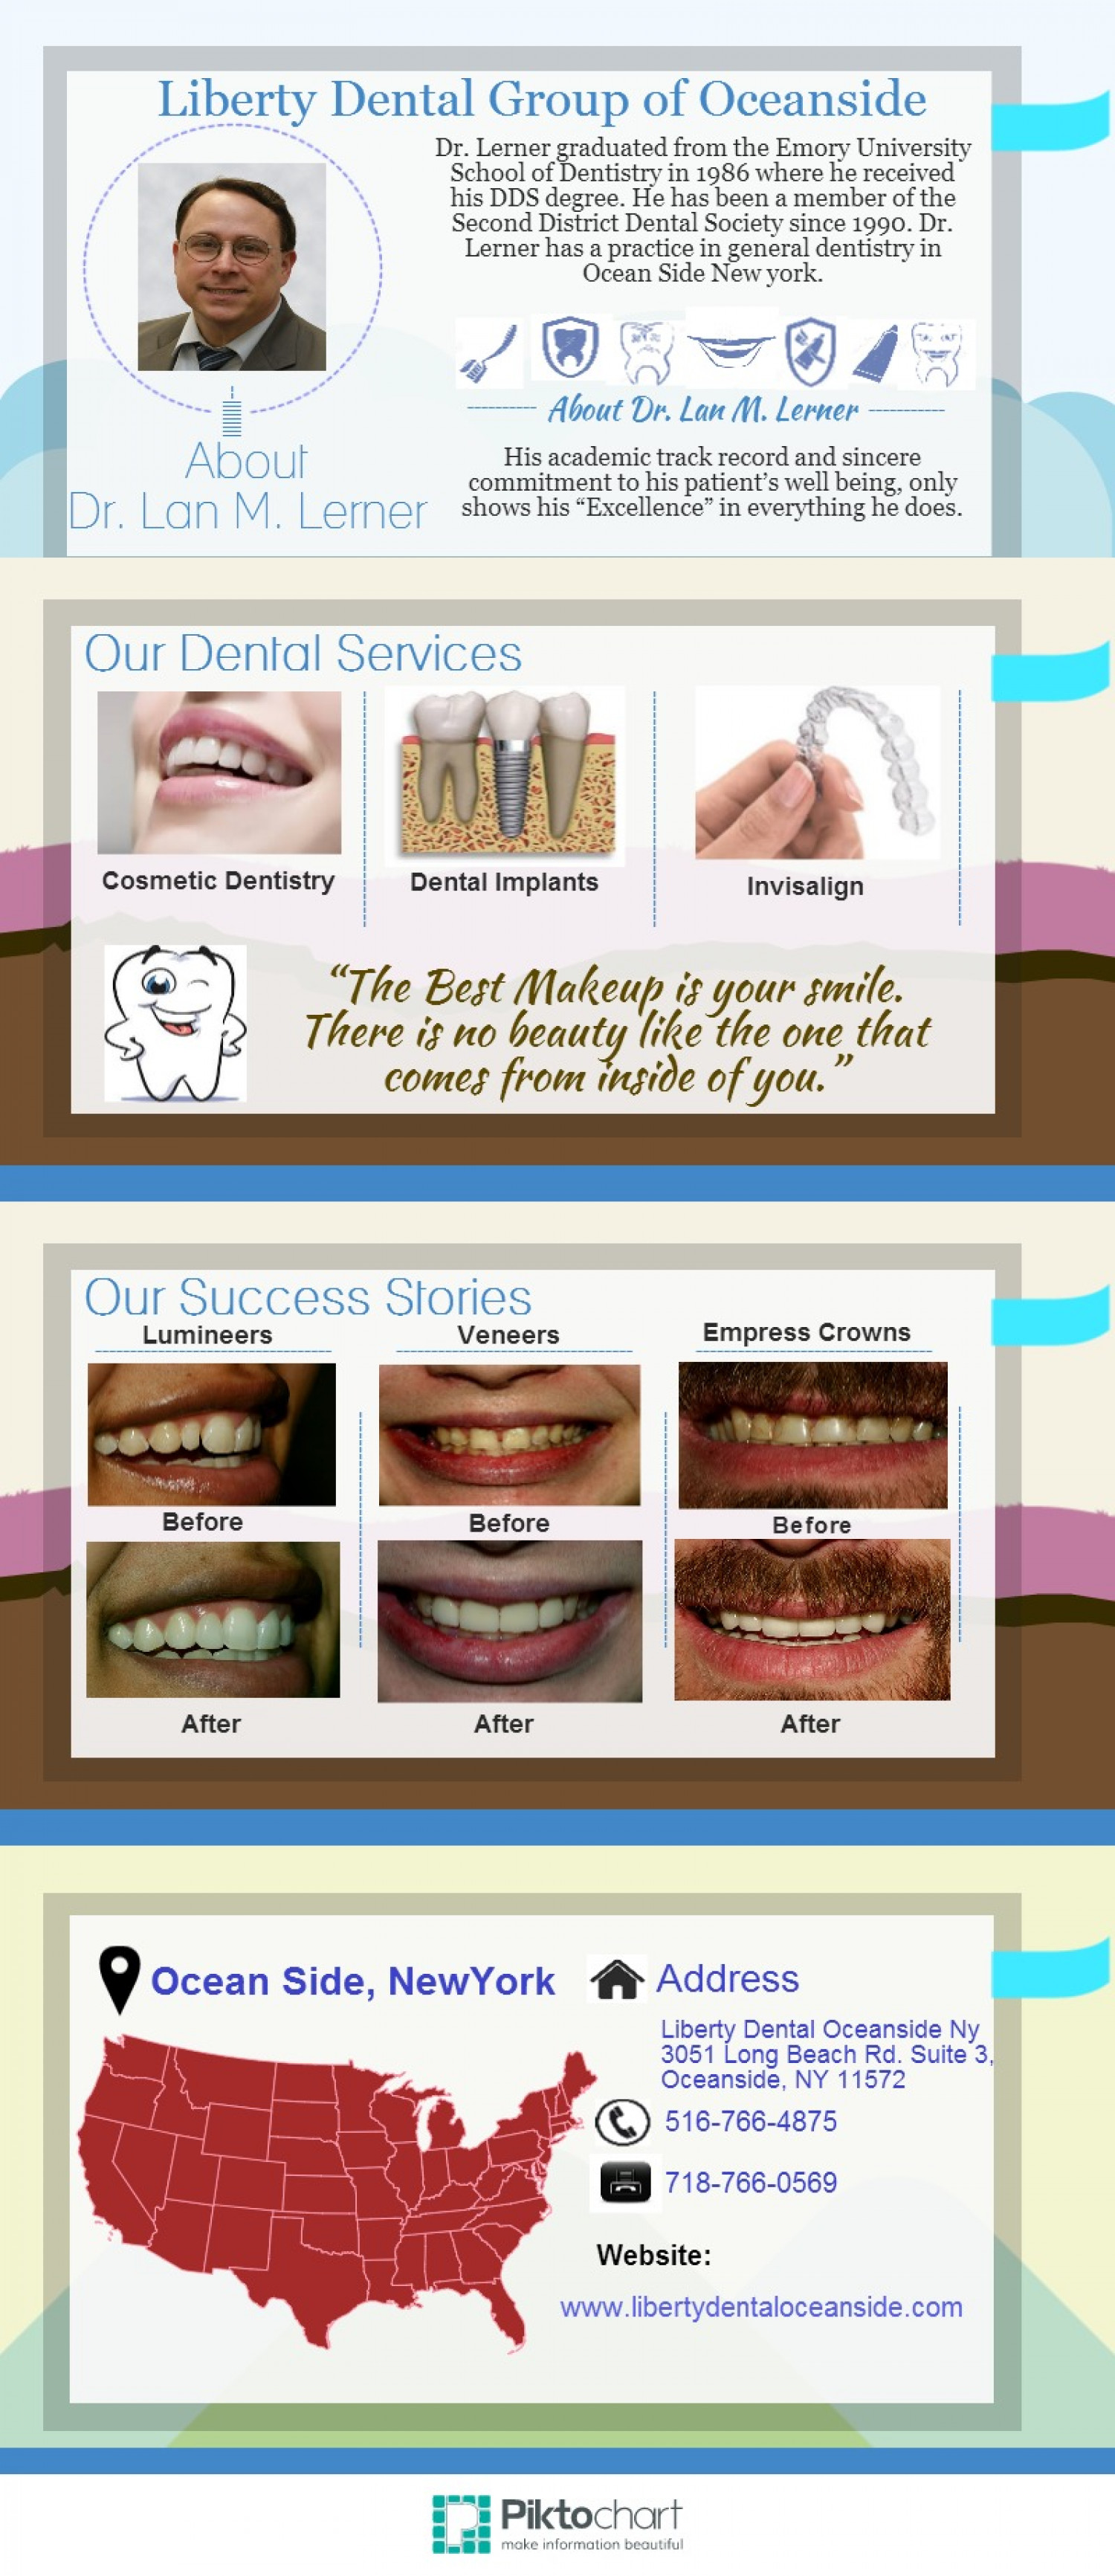 About Dr.Lan. M. Lerner - Family Dentist Oceanside Ny Infographic